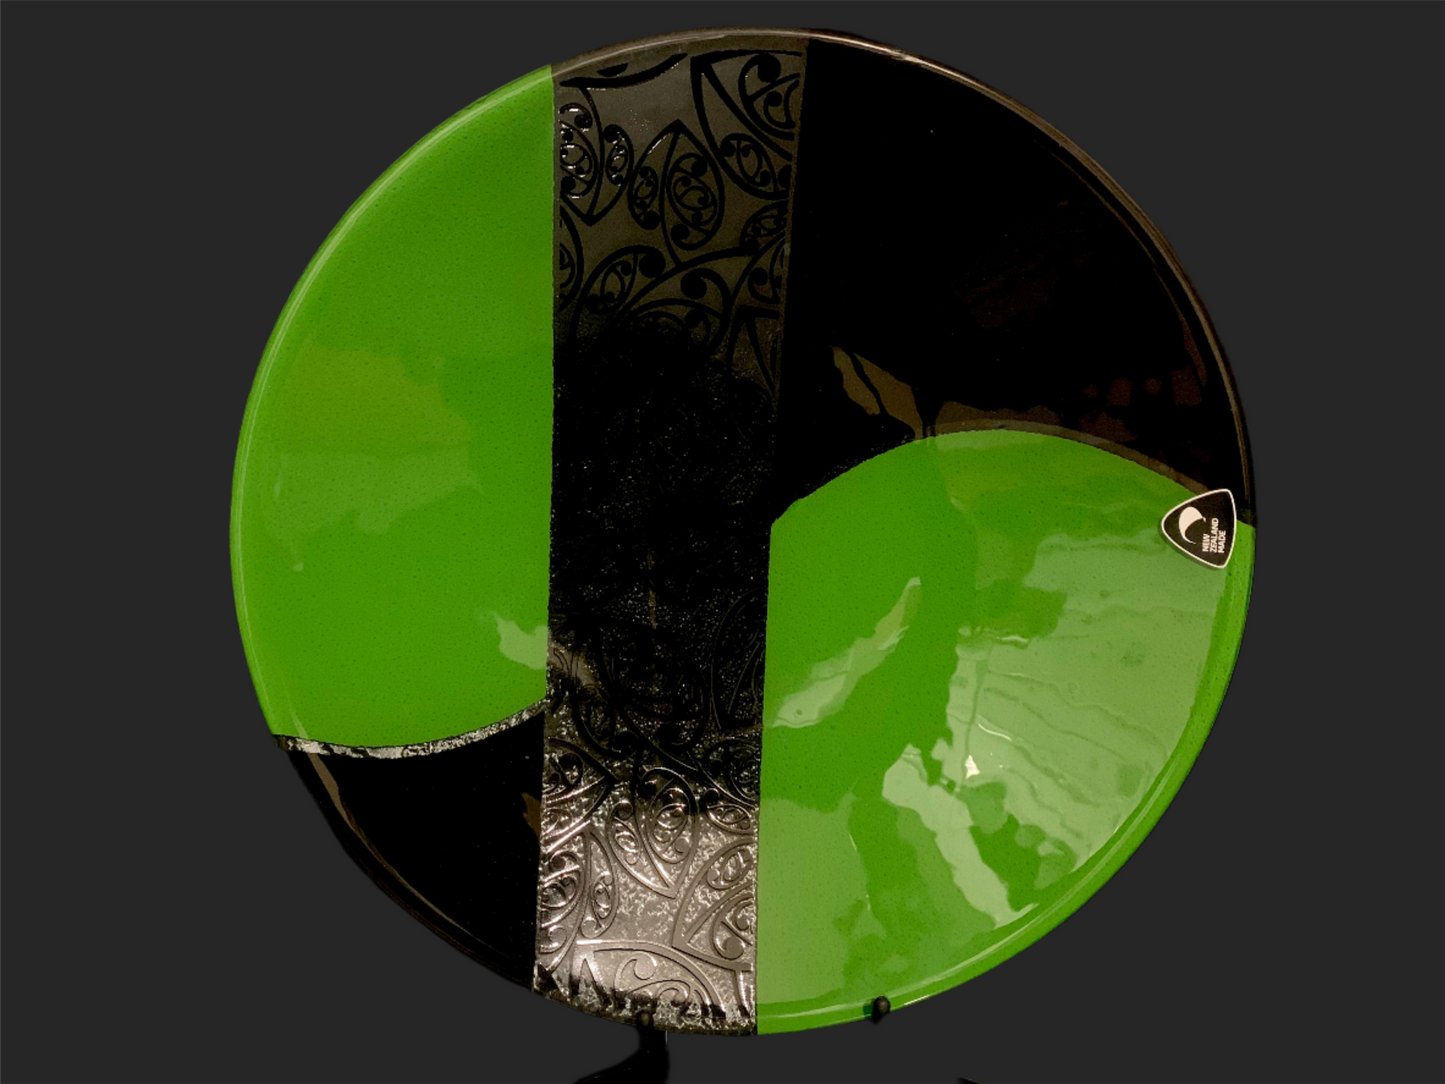 Fused Glass Bowl by Maori Boy - Kowhaiwhai Design (green and black) 32cm